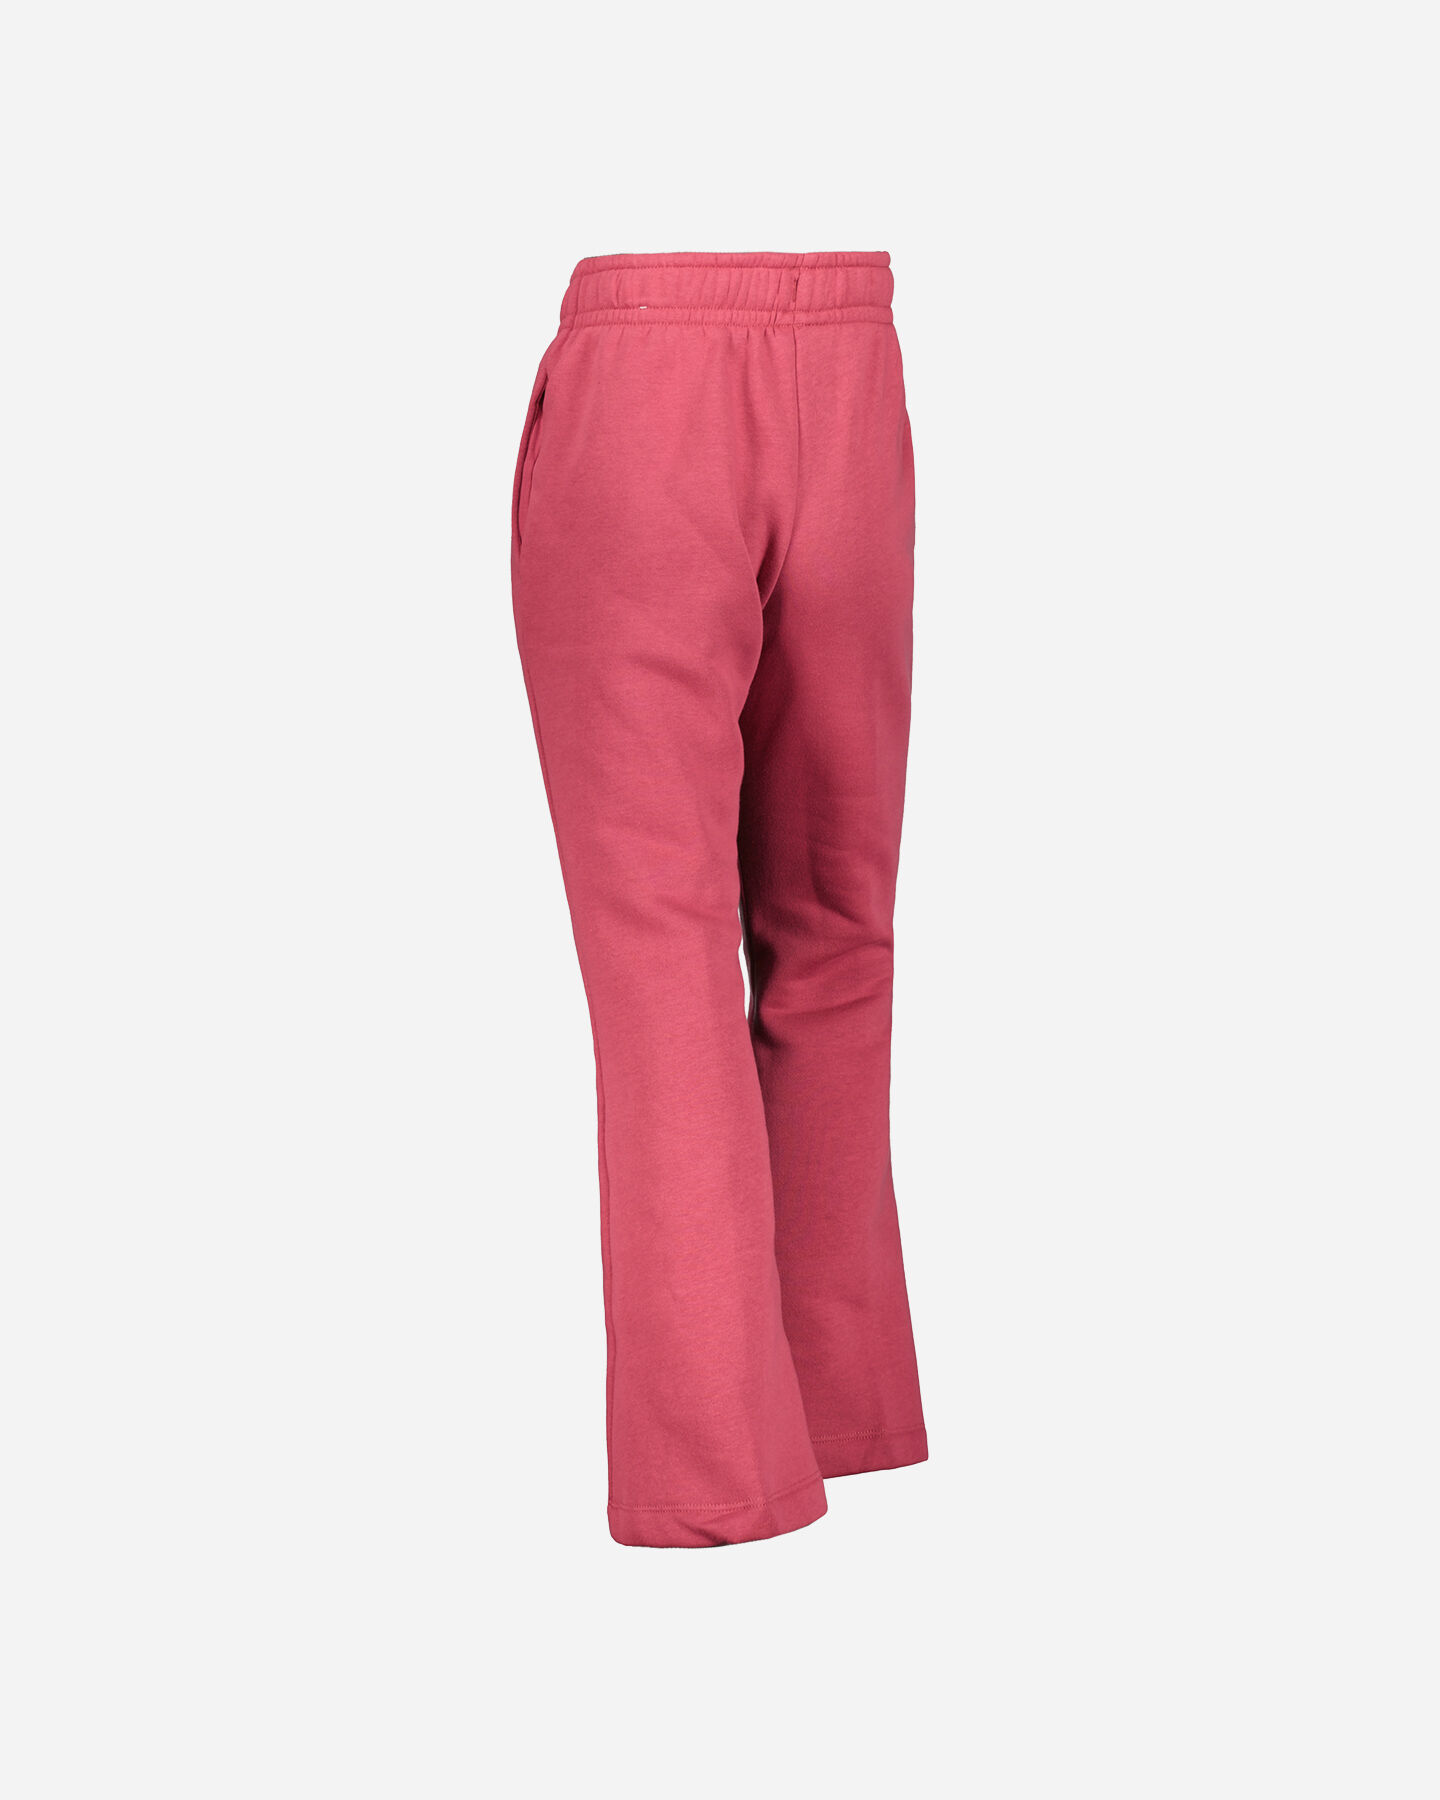  Pantalone NIKE BEET JR S5458148|633|S scatto 2